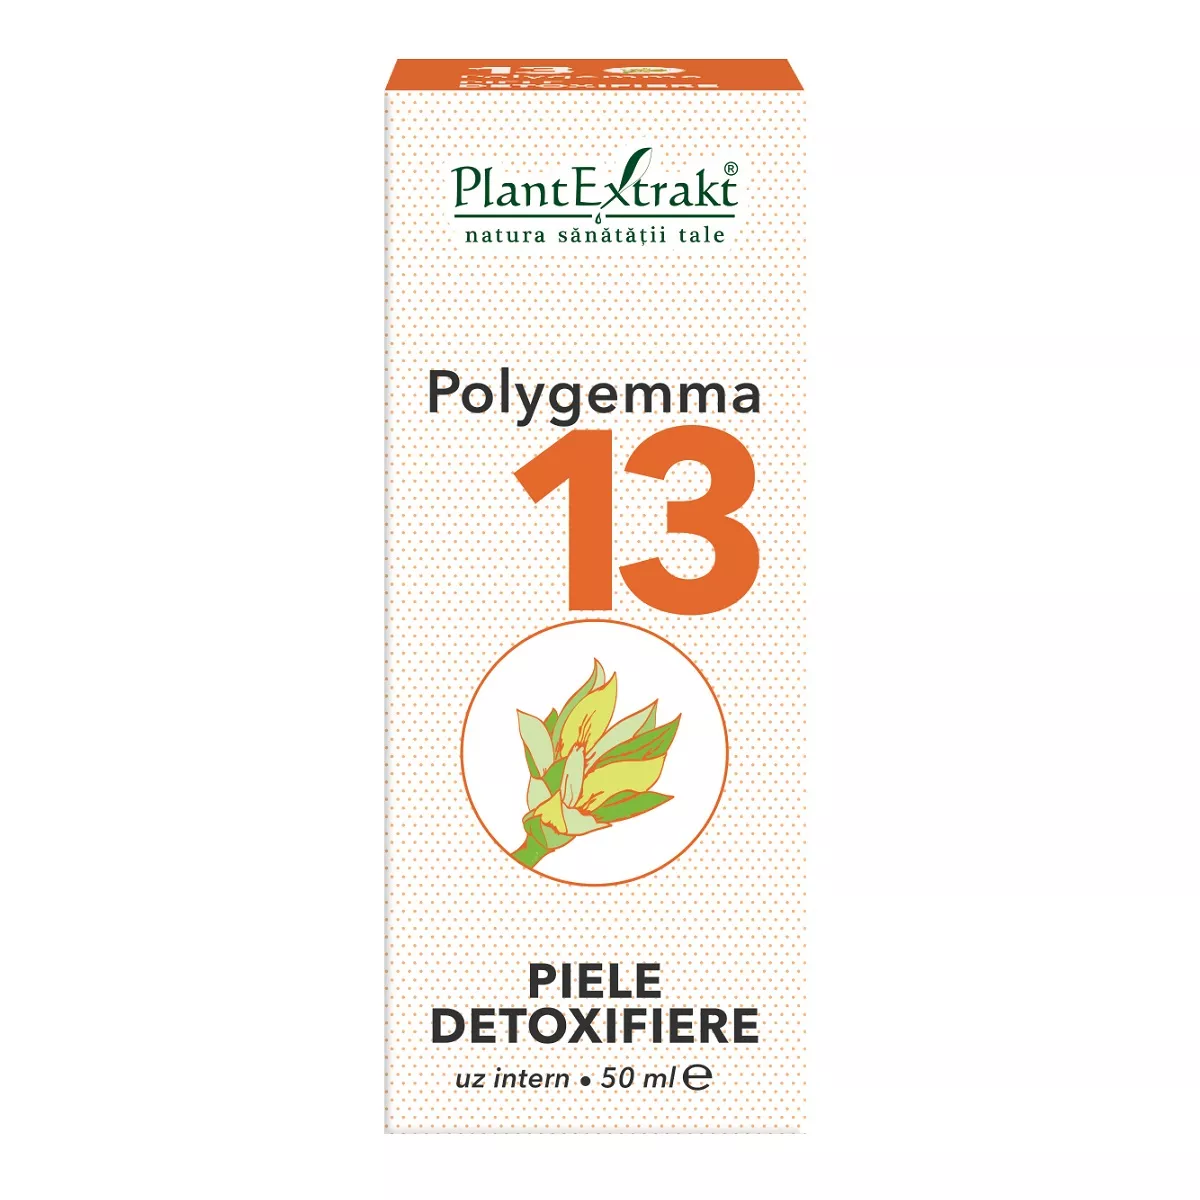 Polygemma 13 Piele detoxifiere, 50 ml, Plantextrakt, [],remediumfarm.ro